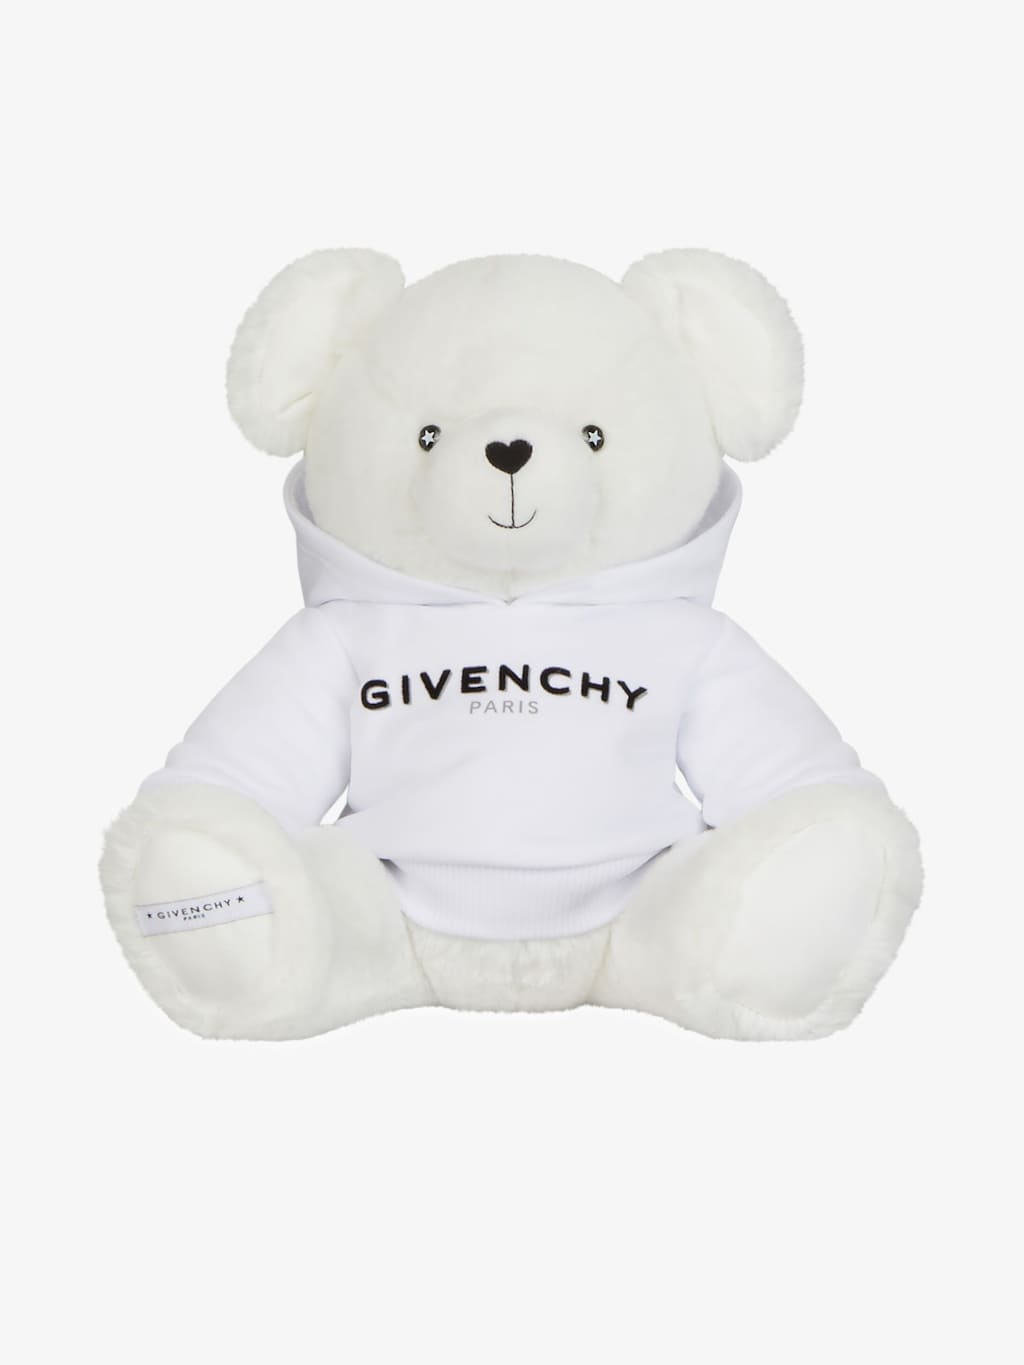 undefined | GIVENCHY PARIS teddy bear